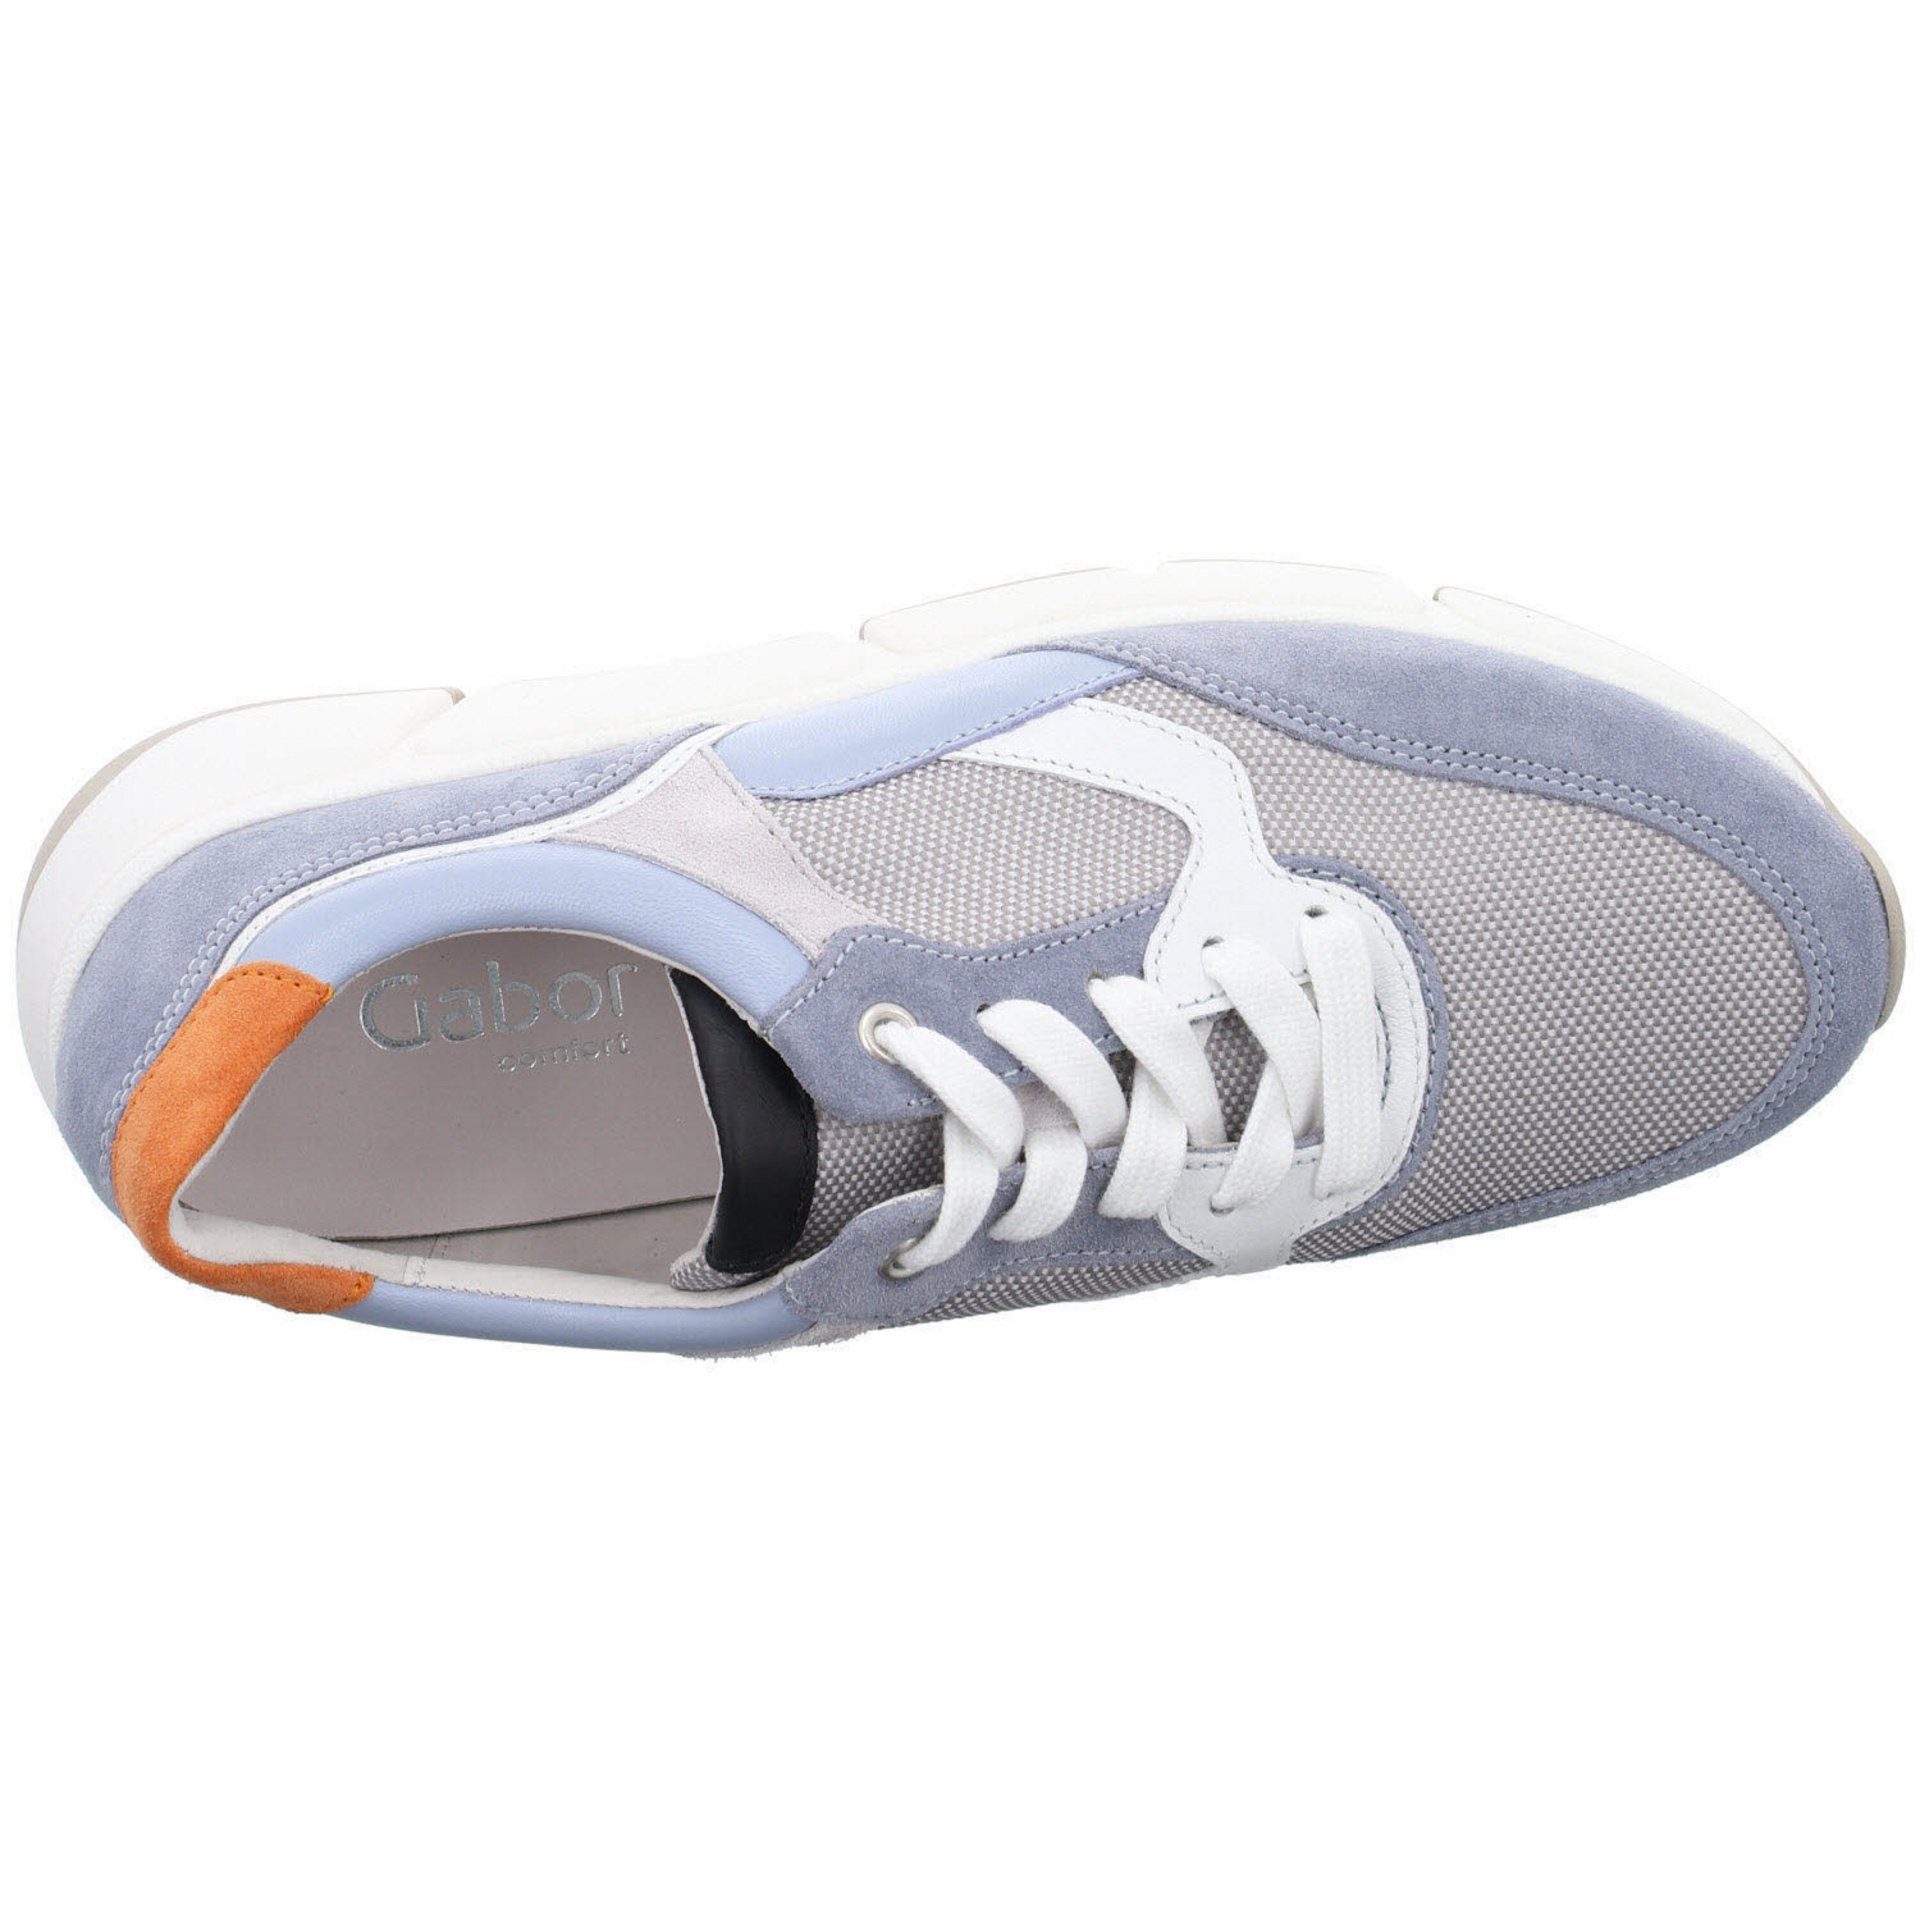 Sneaker Sneaker Gabor Damen cielo/grau/orange Florenz Sneaker Leder-/Textilkombination Schuhe